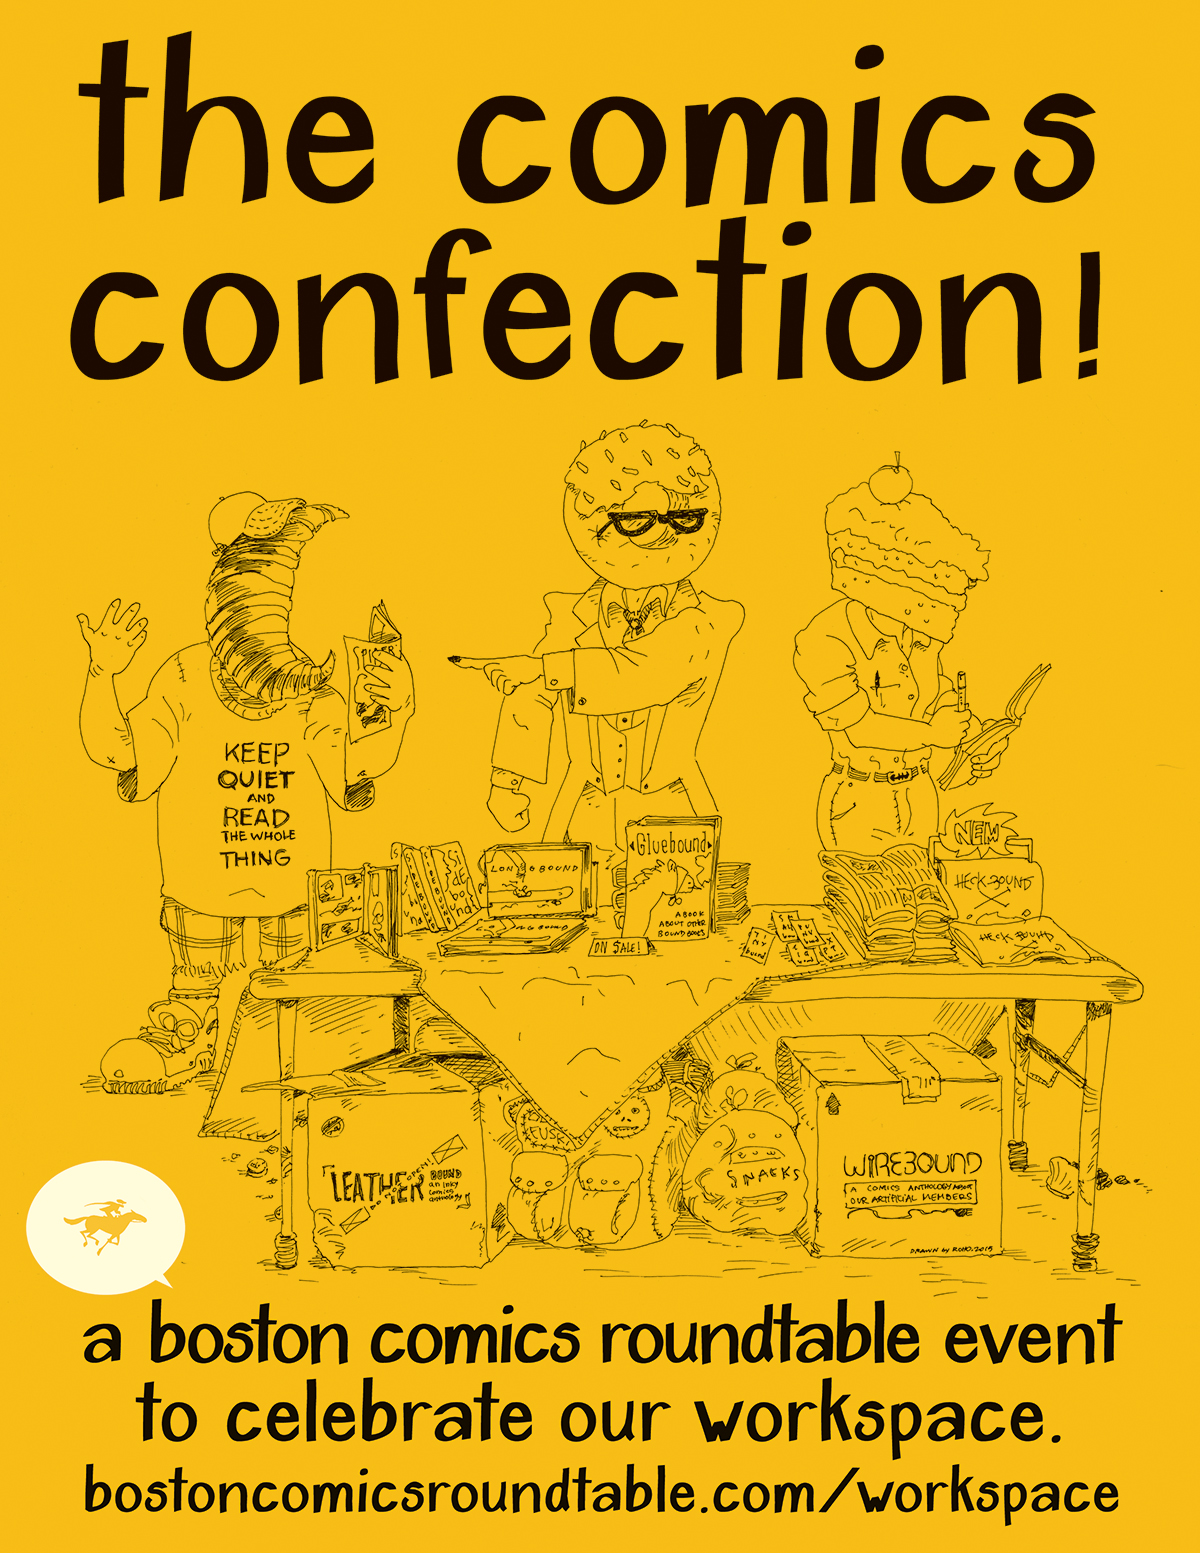 http://bostoncomics.com/wp-content/uploads/2015/06/The-Comics-Confection-Temporary-Flyer.jpg